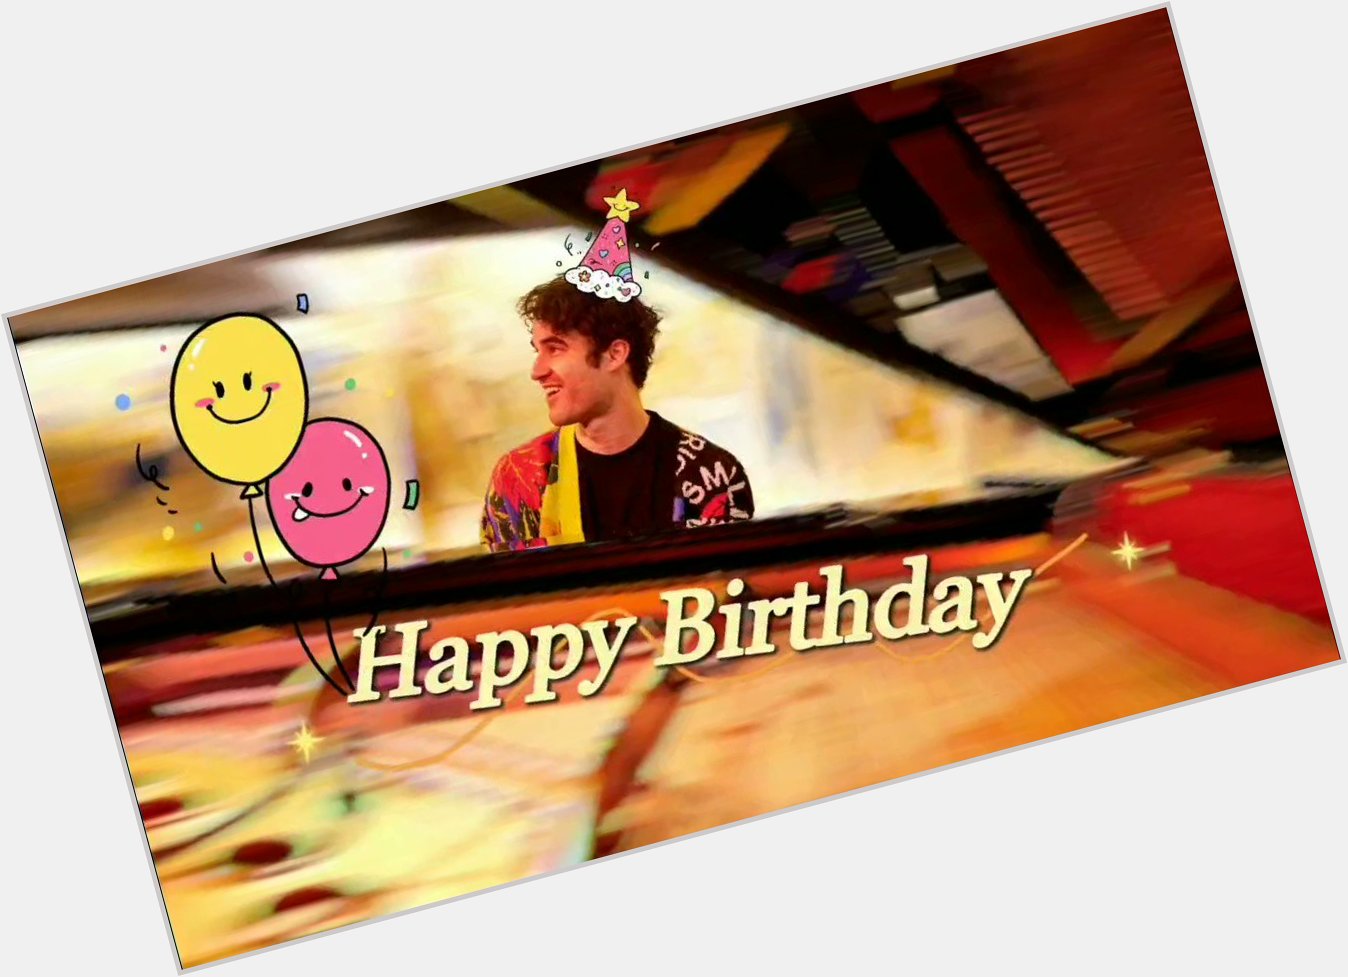 Happy birthday to Darren Criss       